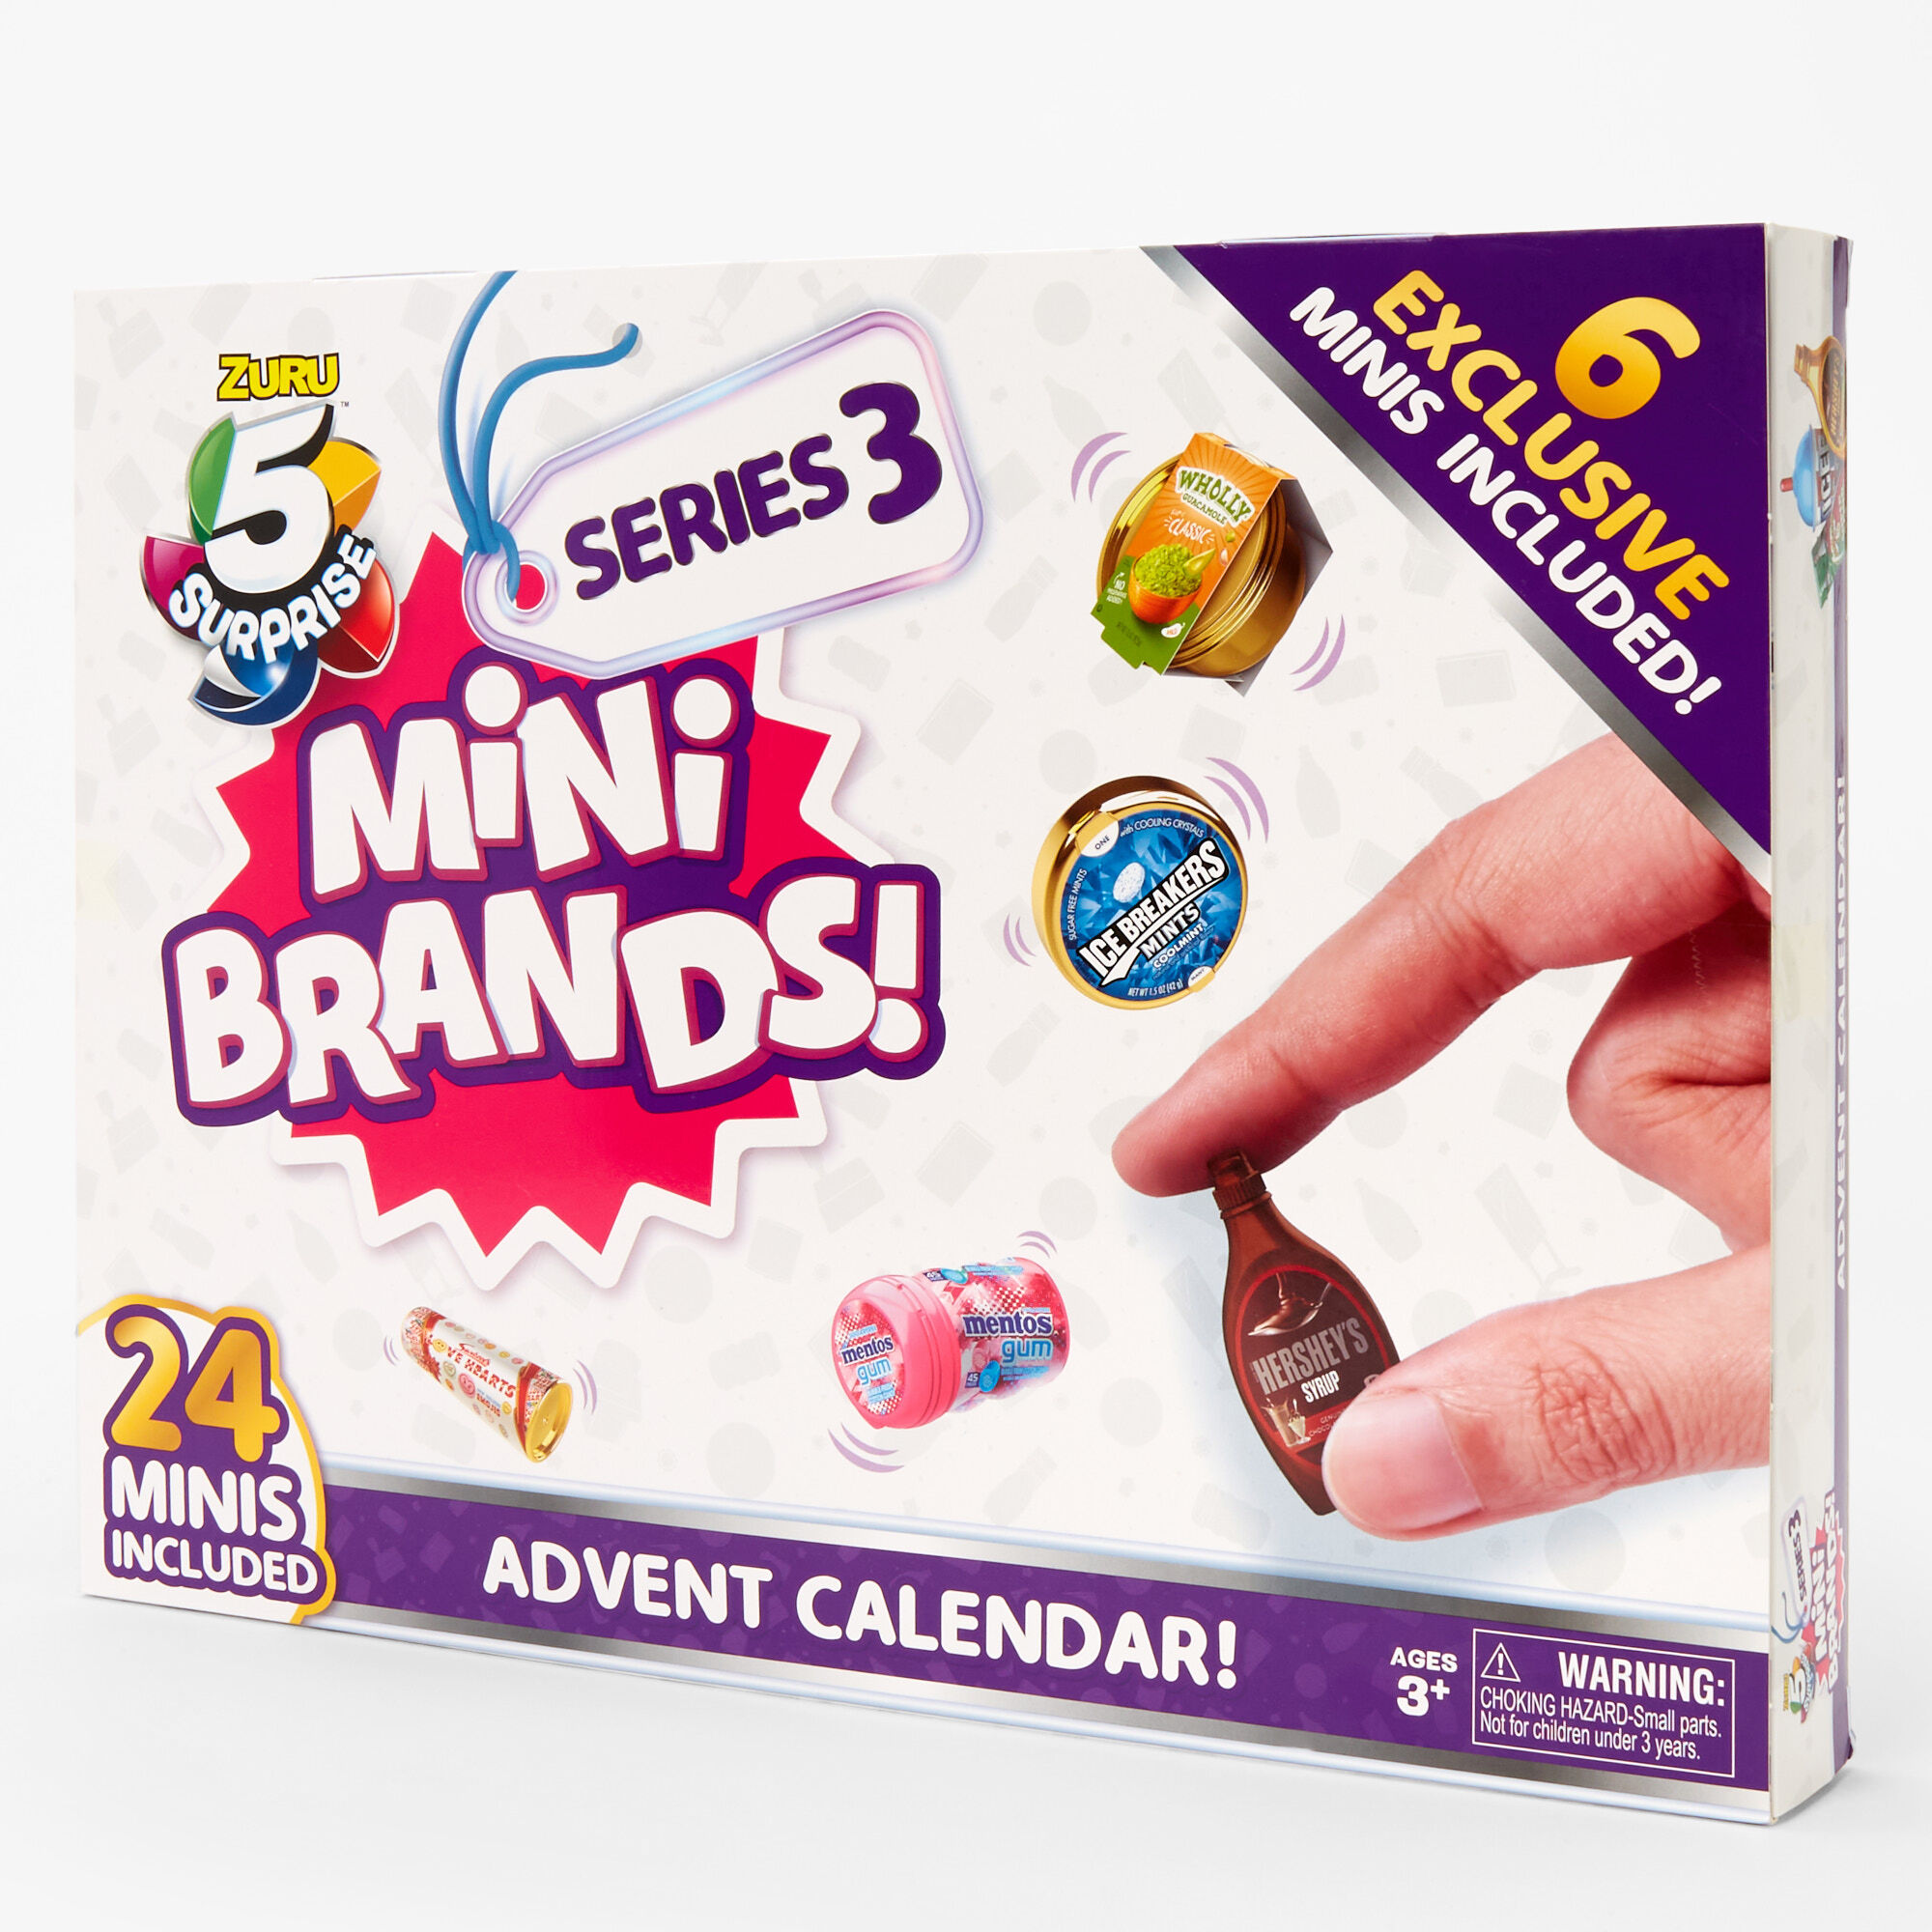 Mini Brands Series 5 Advent Calendar by Zuru 5 Surprise at Fleet Farm